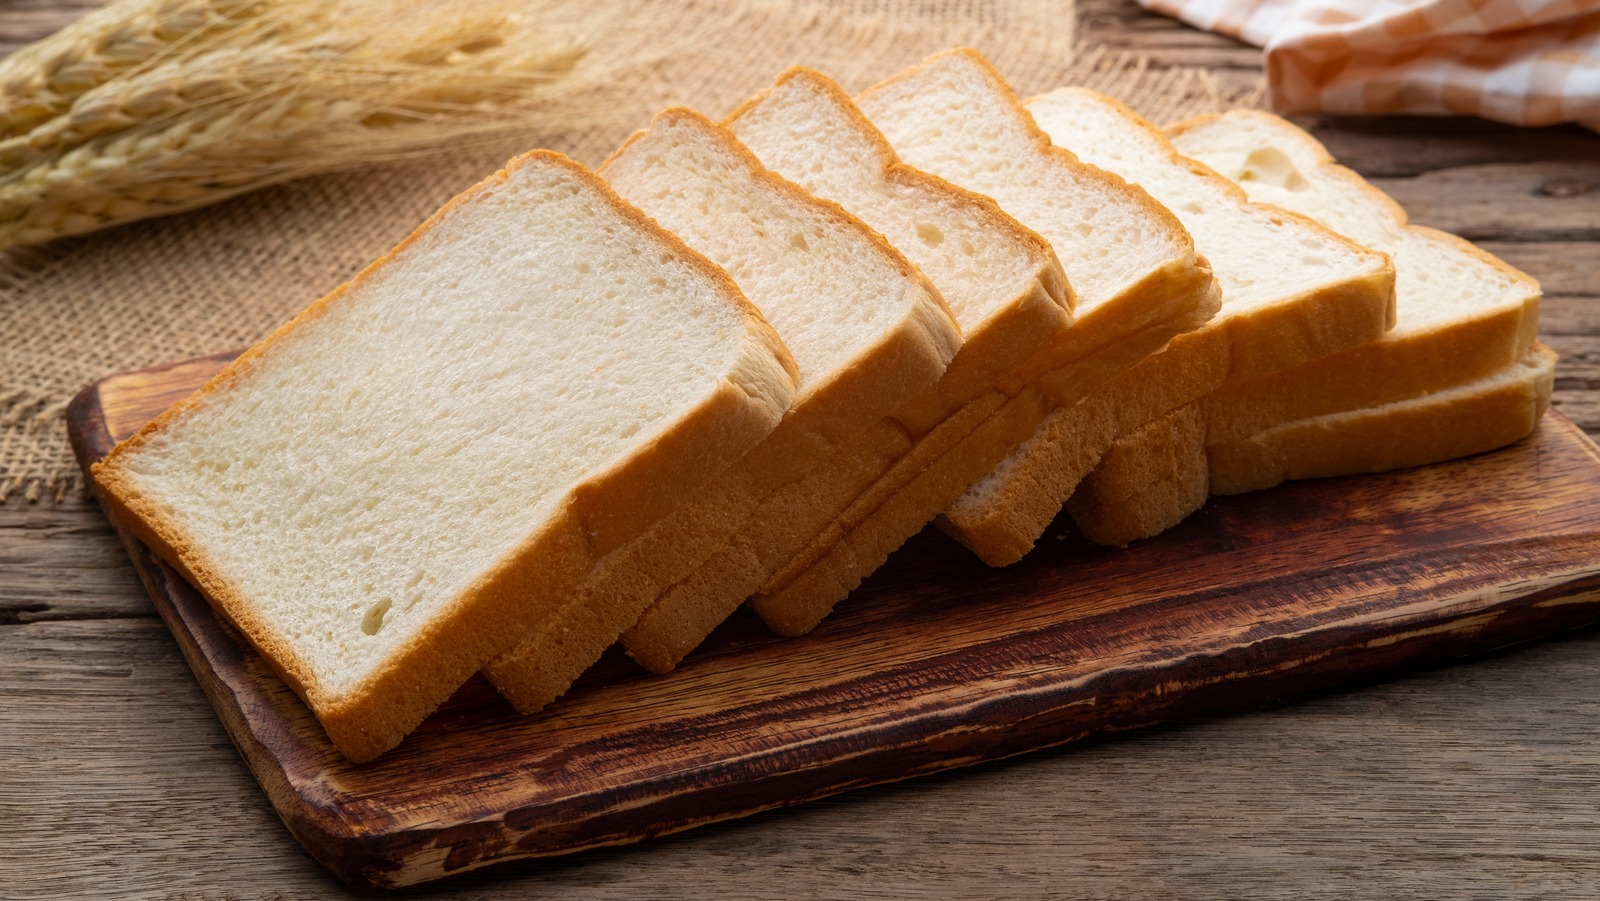 https://www.foodrepublic.com/img/gallery/why-sliced-bread-was-banned-in-world-war-ii/l-intro-1698940522.jpg